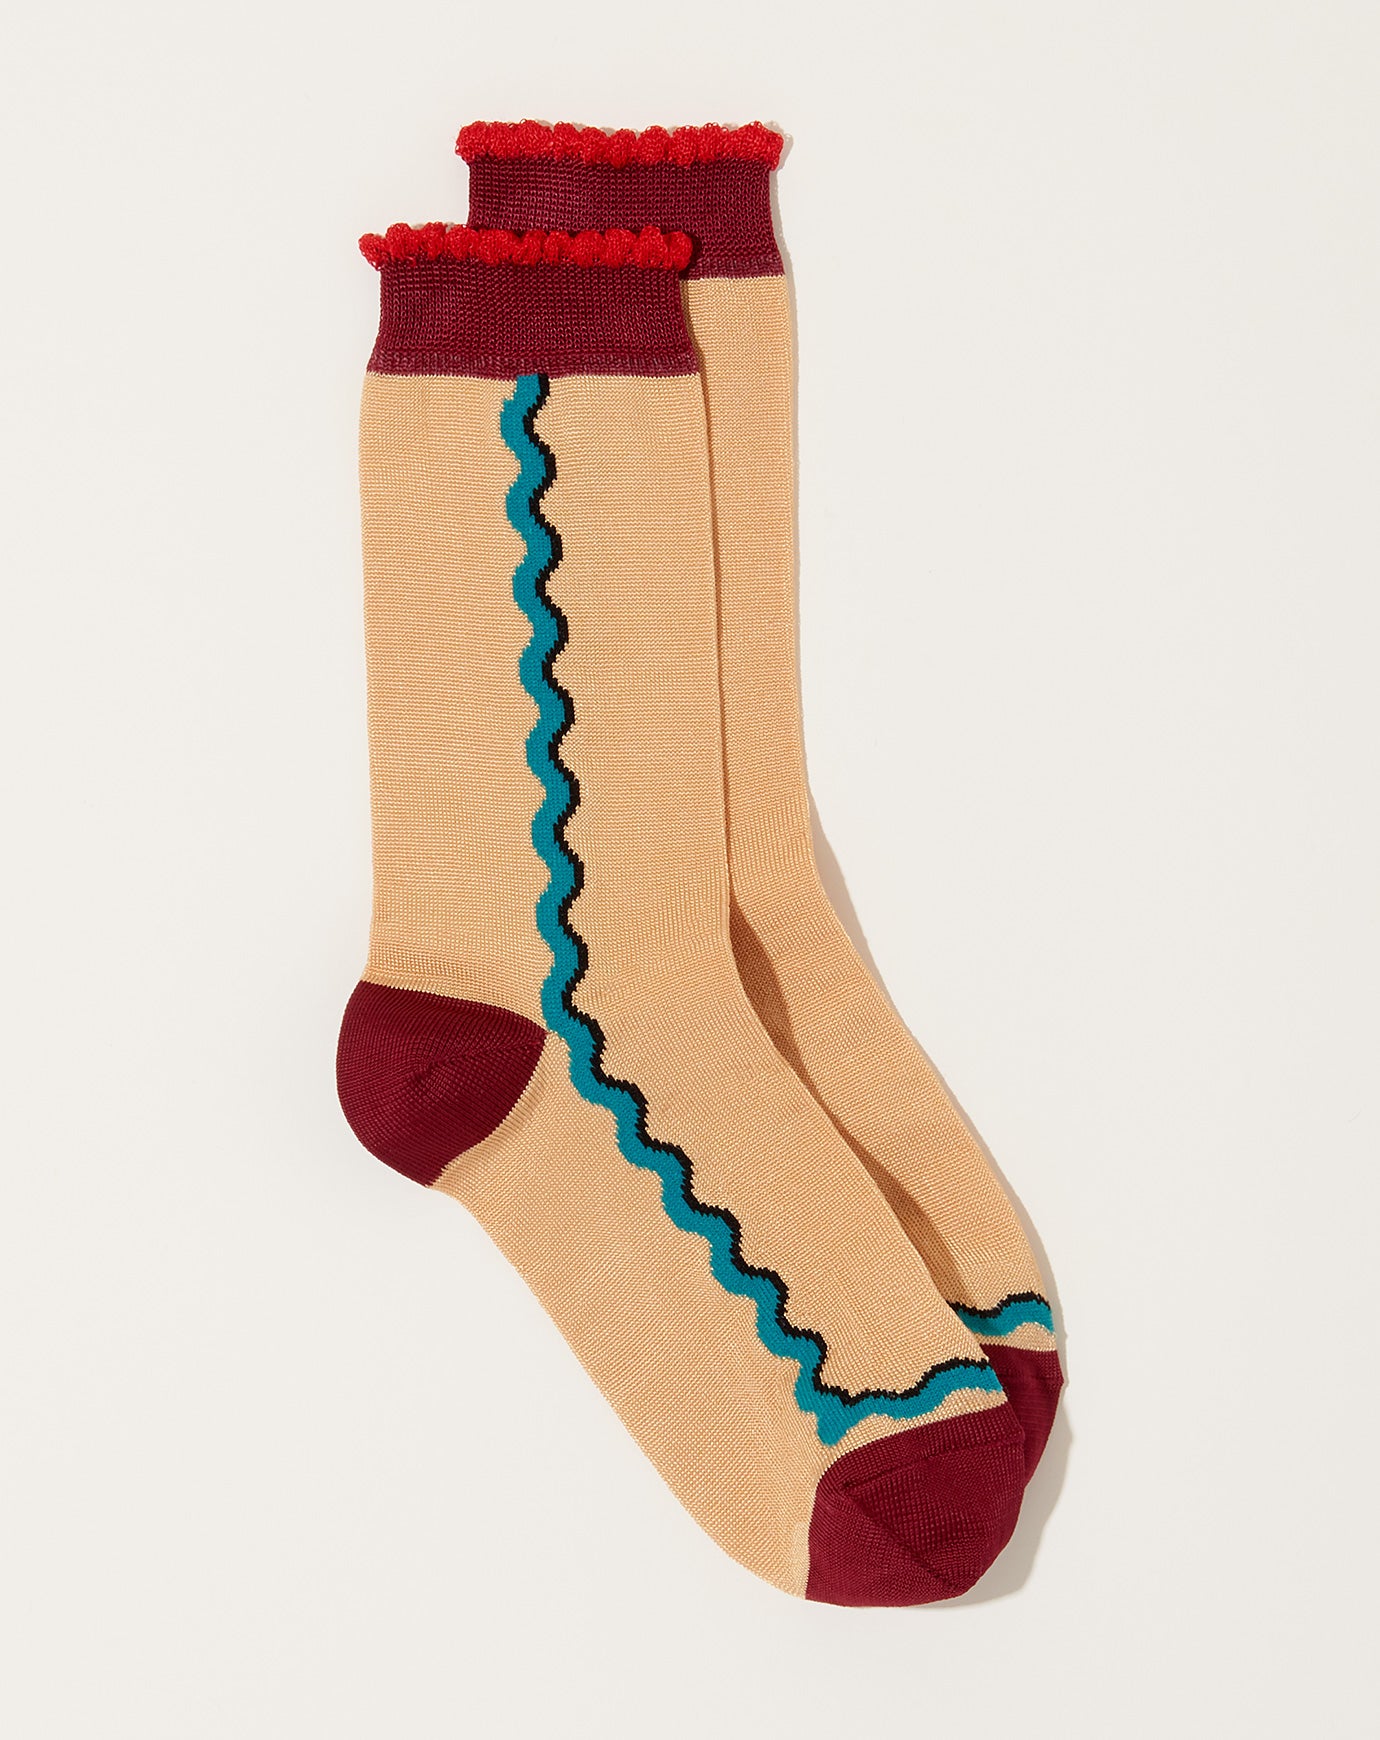 Exquisite J Ondina Socks in Cream